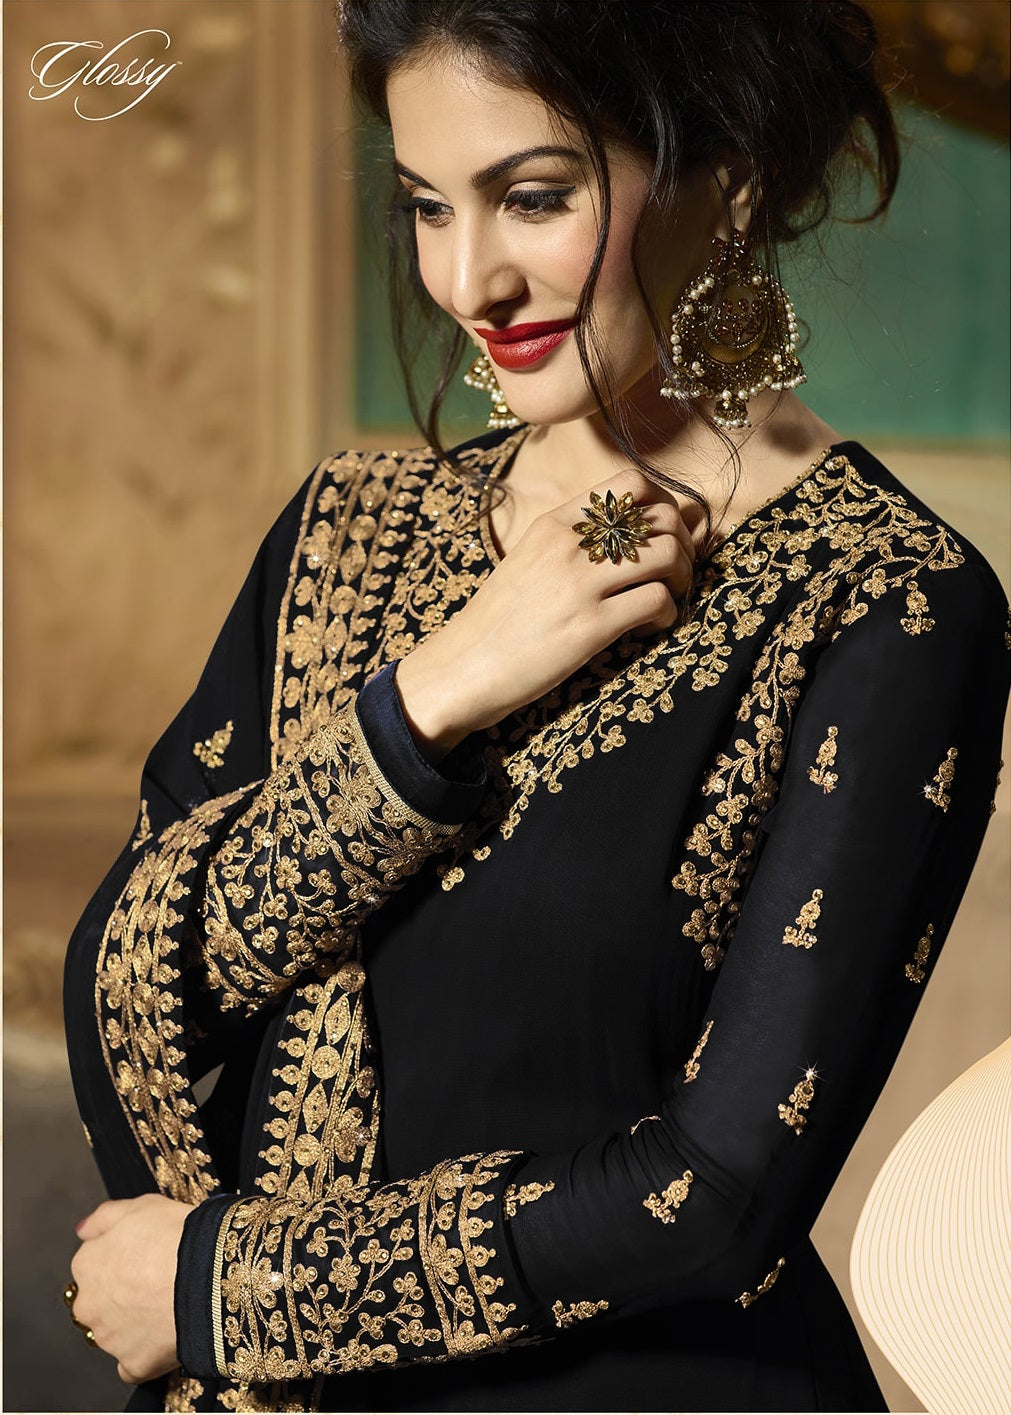 Black Indian Stylish Designer Bollywood Party Wear Anarkali Salwar Suit Dress Material Unstitched For Women